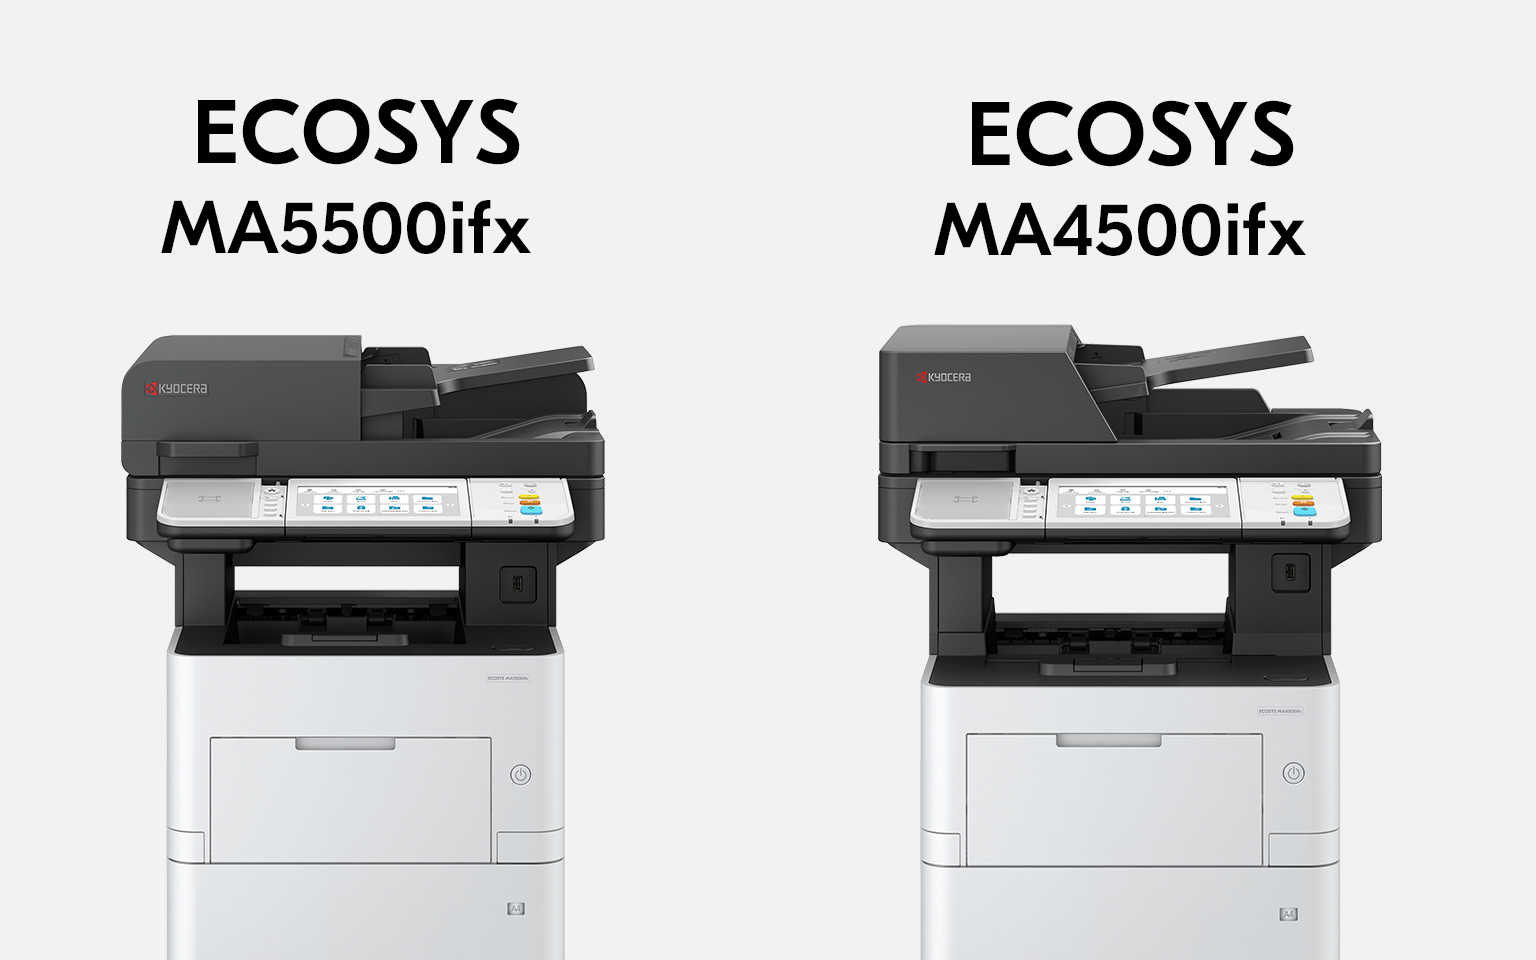 Kyocera ECOSYS printers